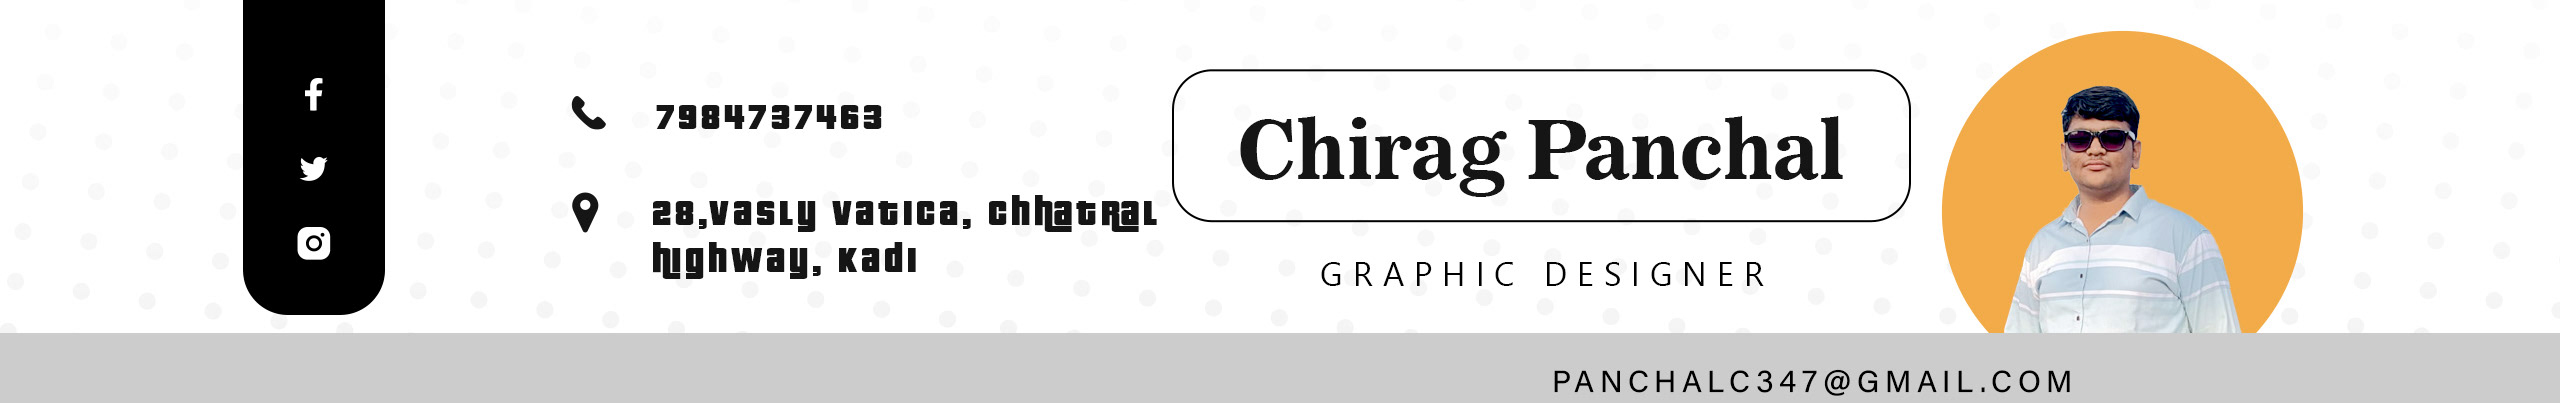 CHIRAG PANCHAL's profile banner